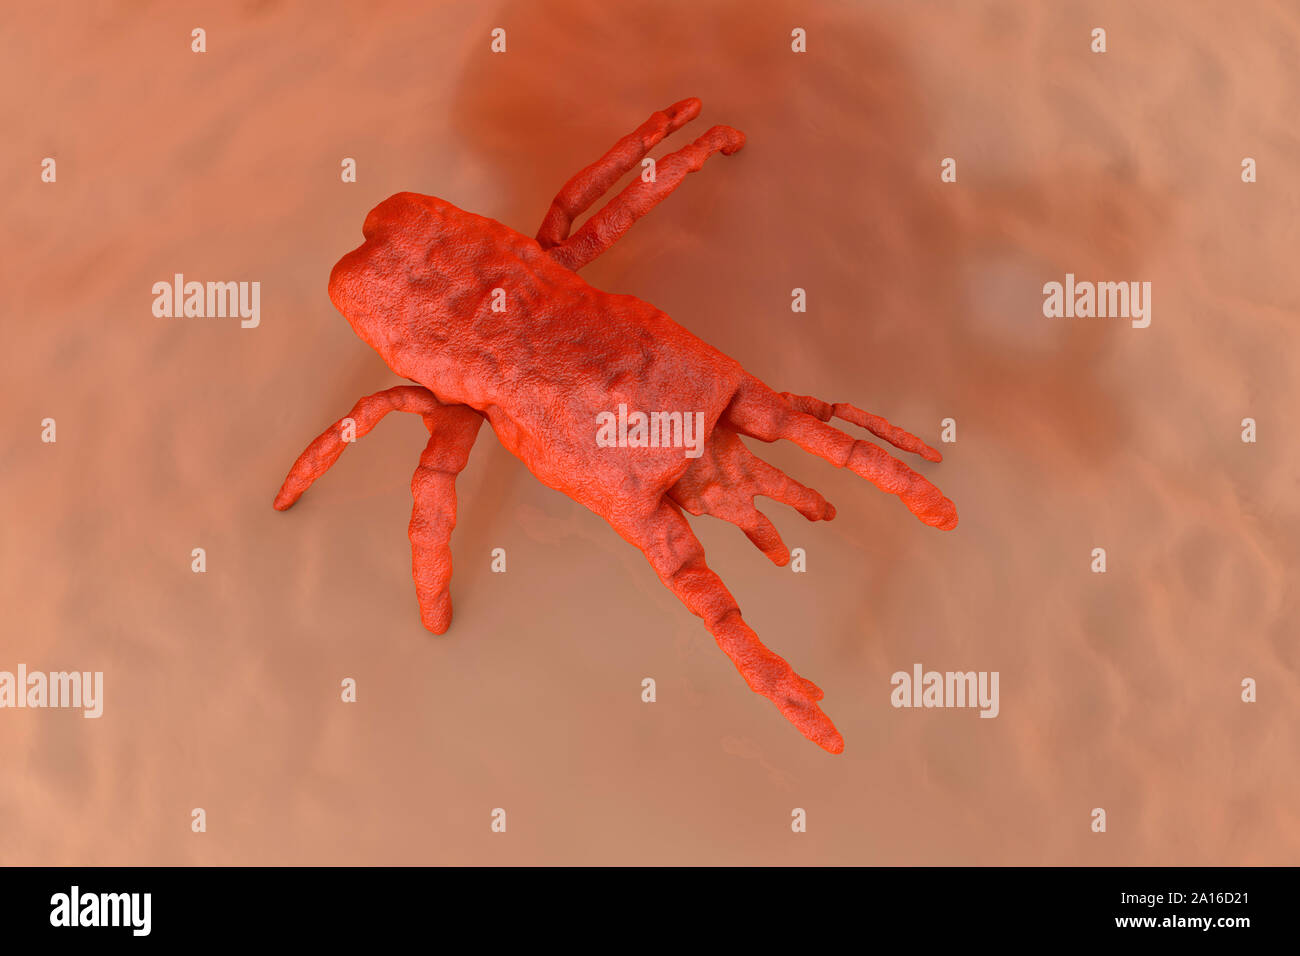 3D Rendered Illustration visualization of orange mite on skin Stock Photo